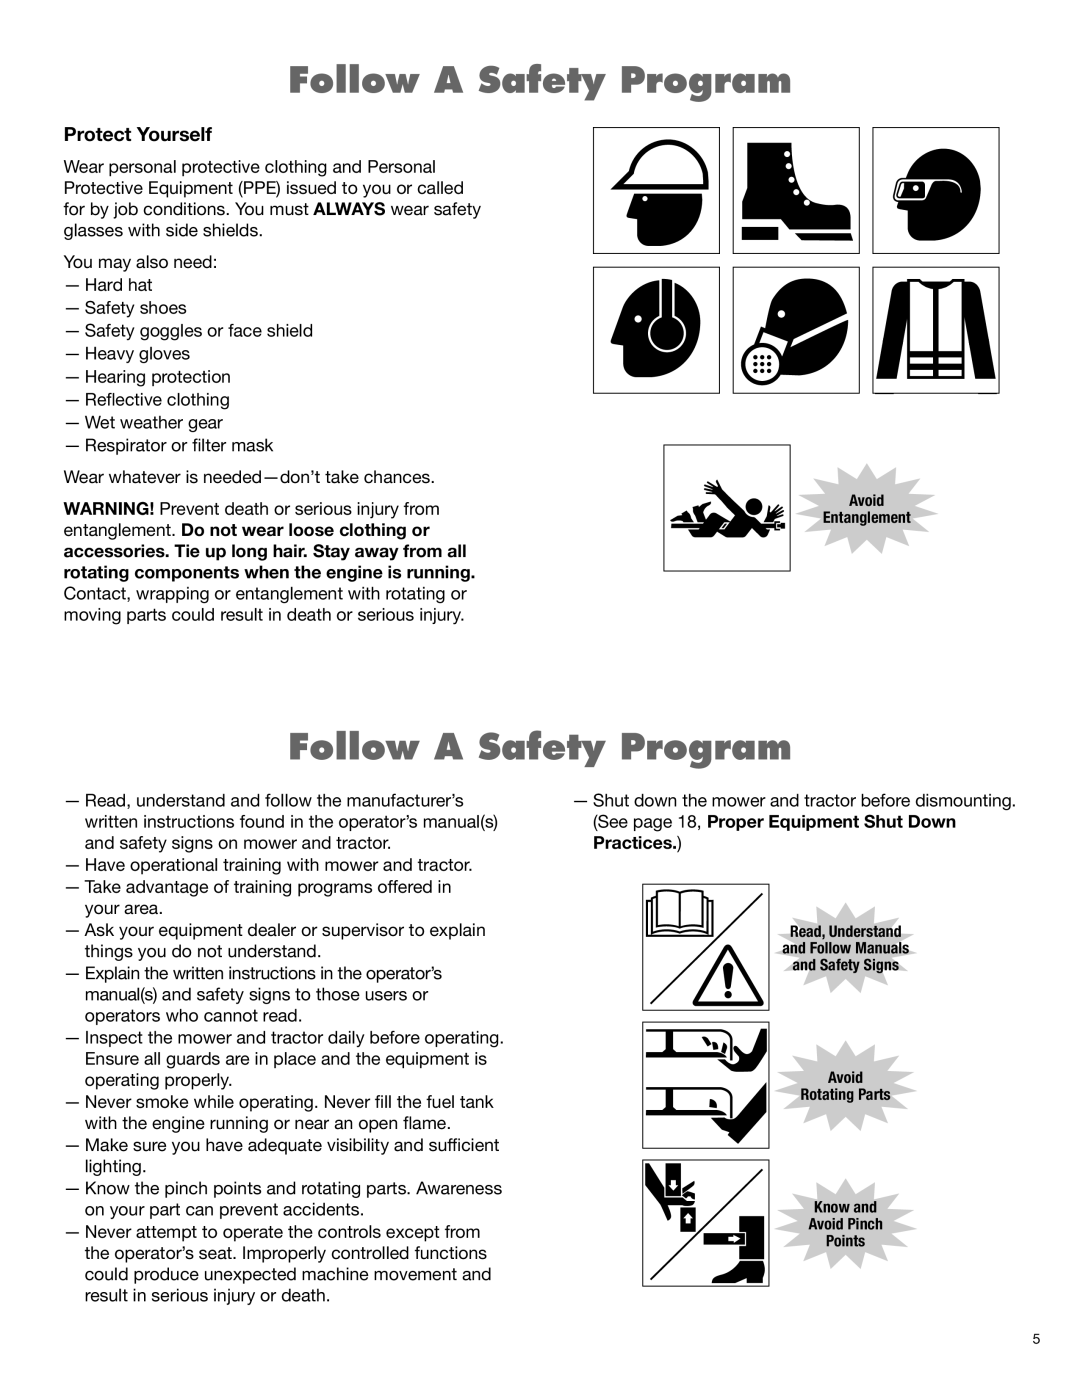 Alamo 1900 manual Follow A Safety Program, Protect Yourself 